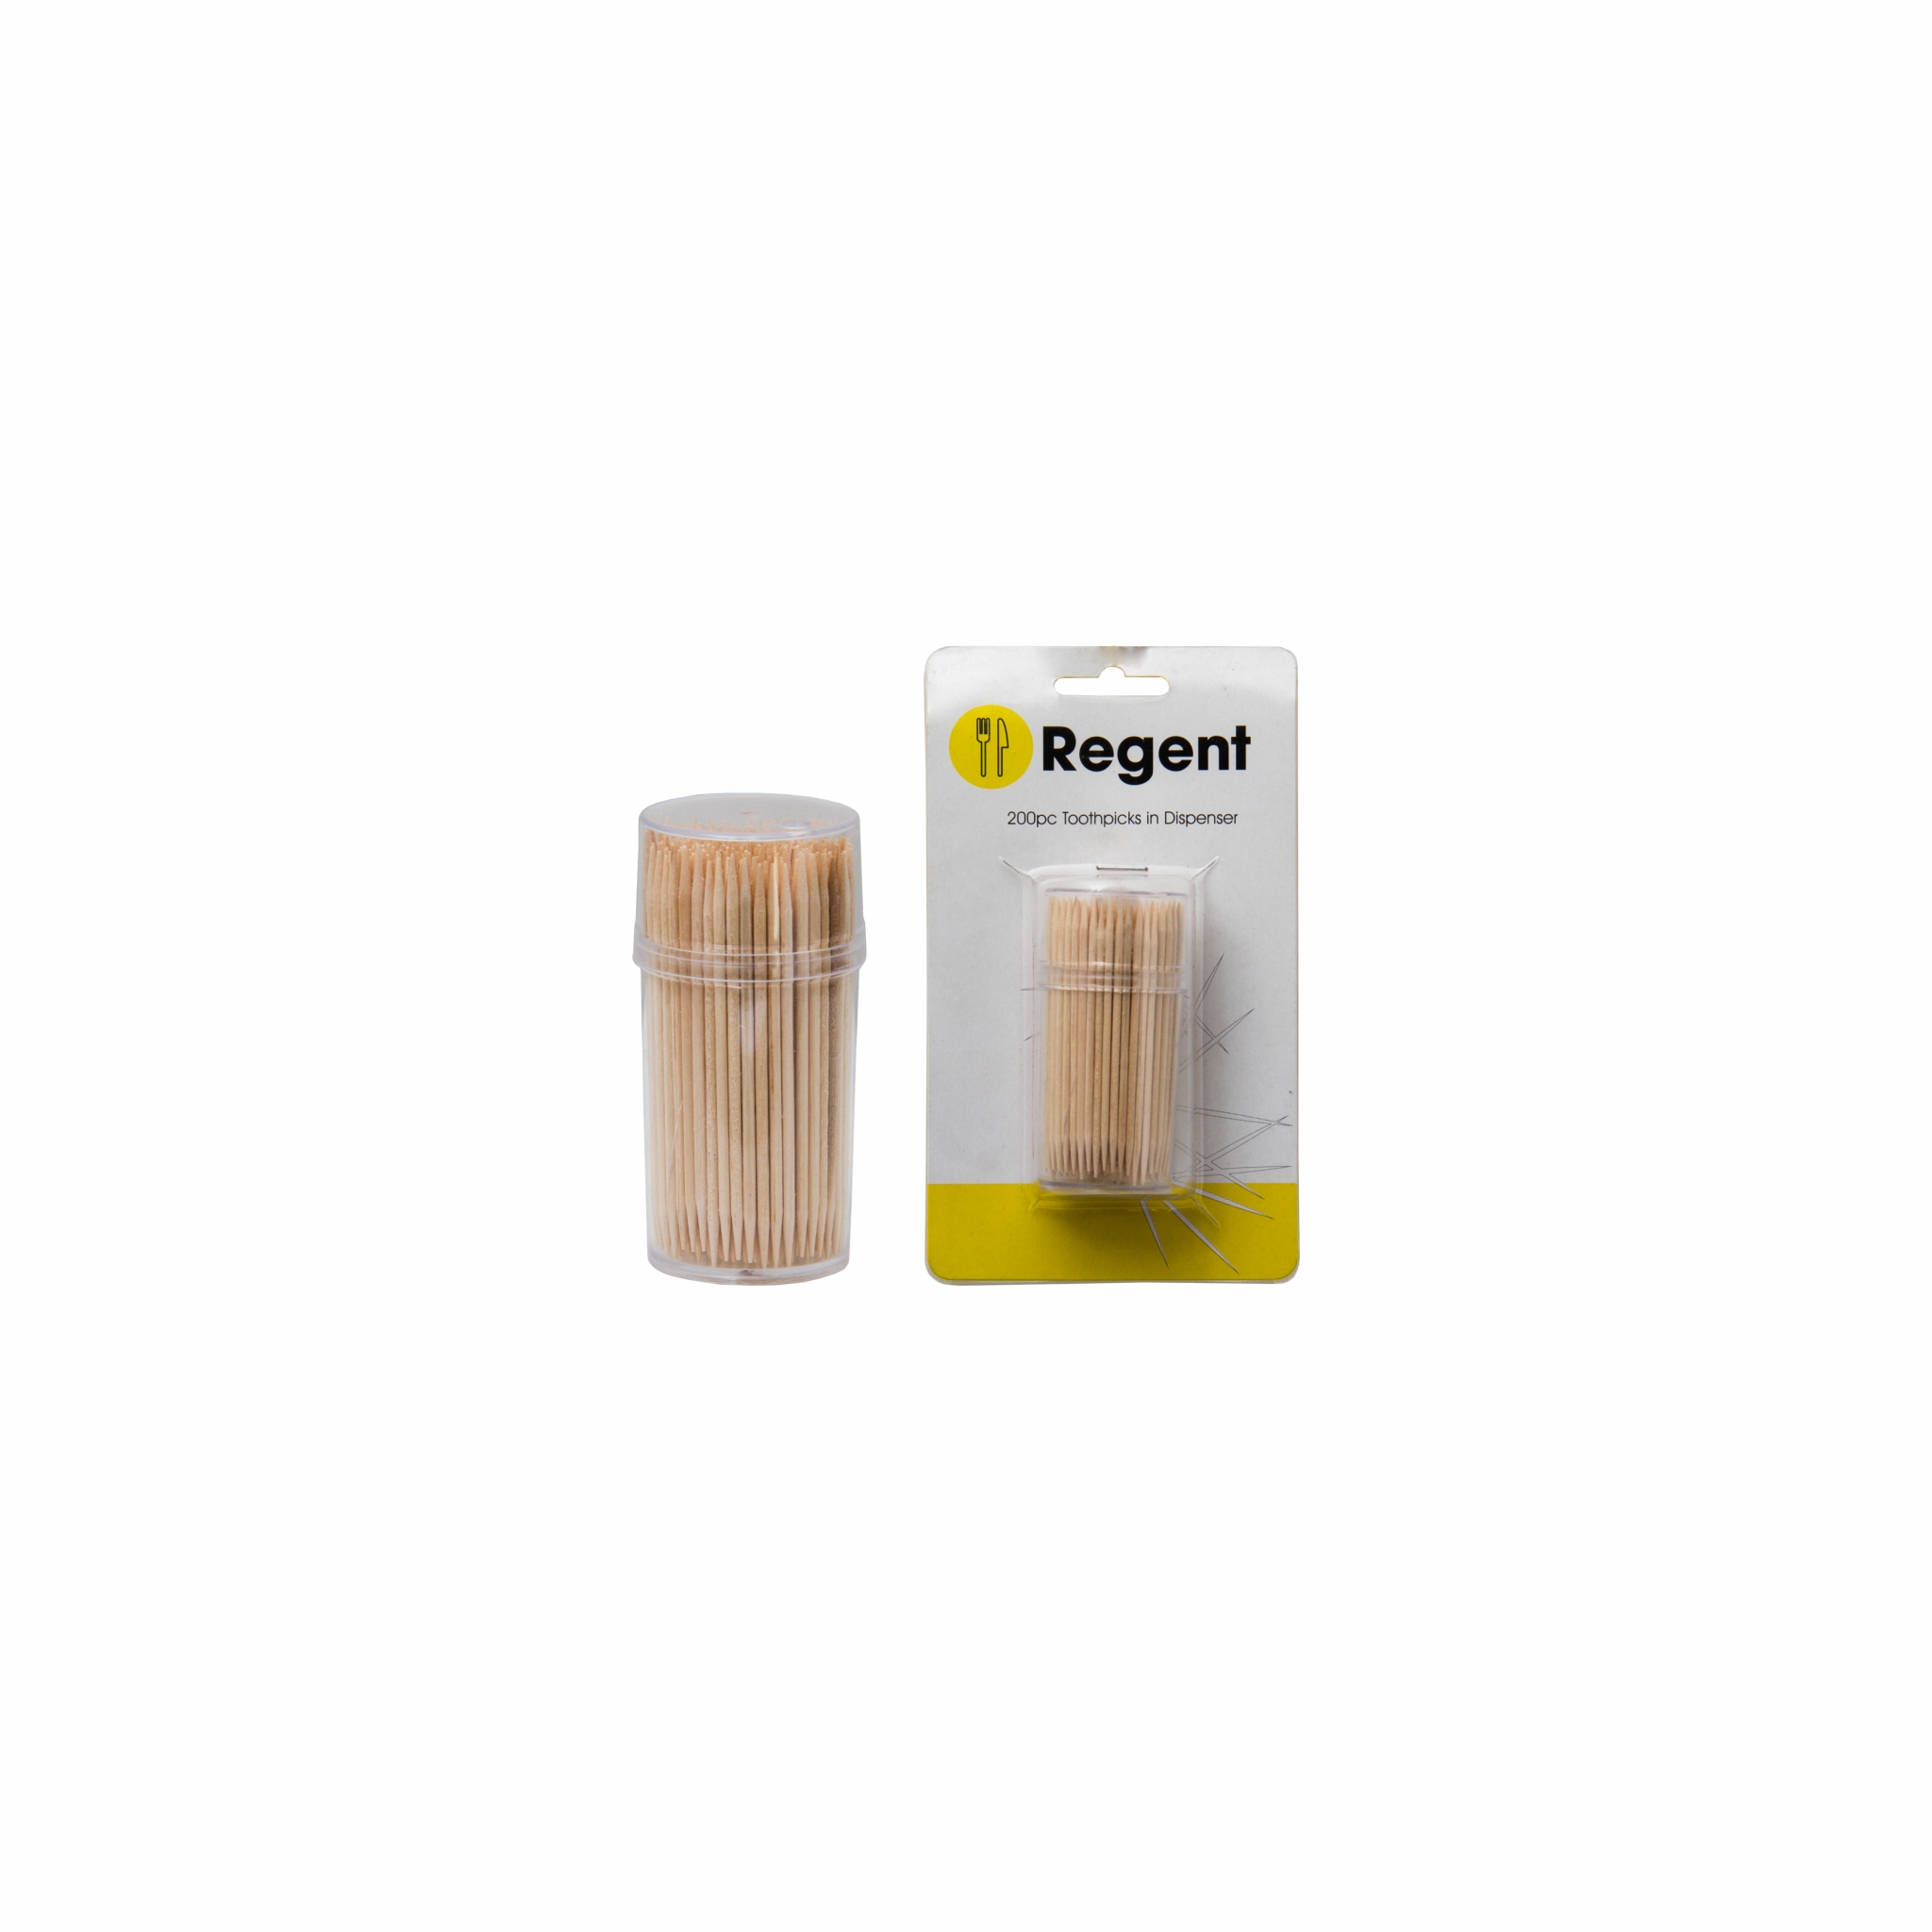 Regent Toothpicks Bamboo in Dispenser 200 Piece